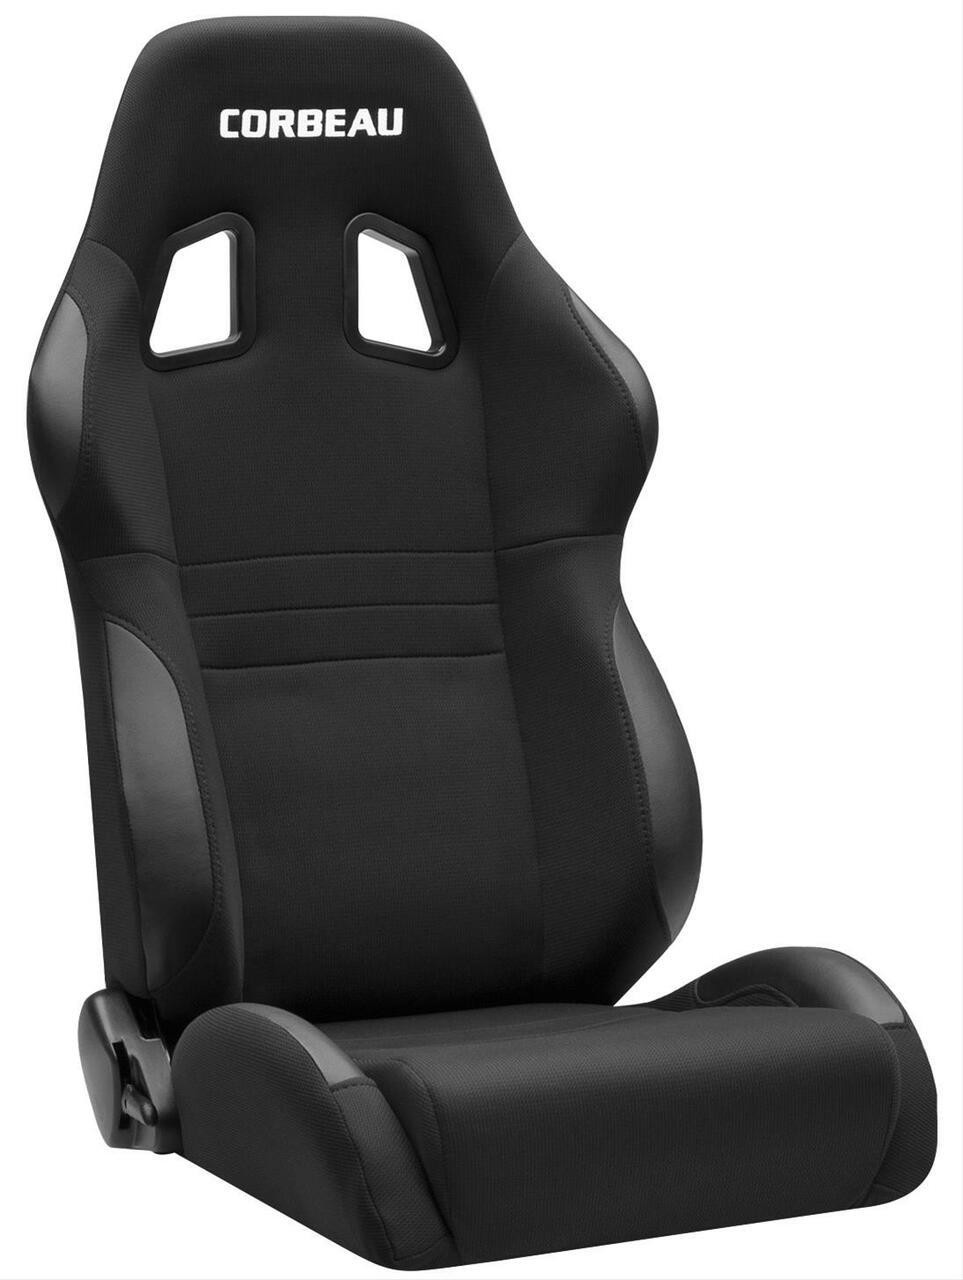 Corbeau Corbeau A4 Racing Seat Black/Cloth Wide - Pair